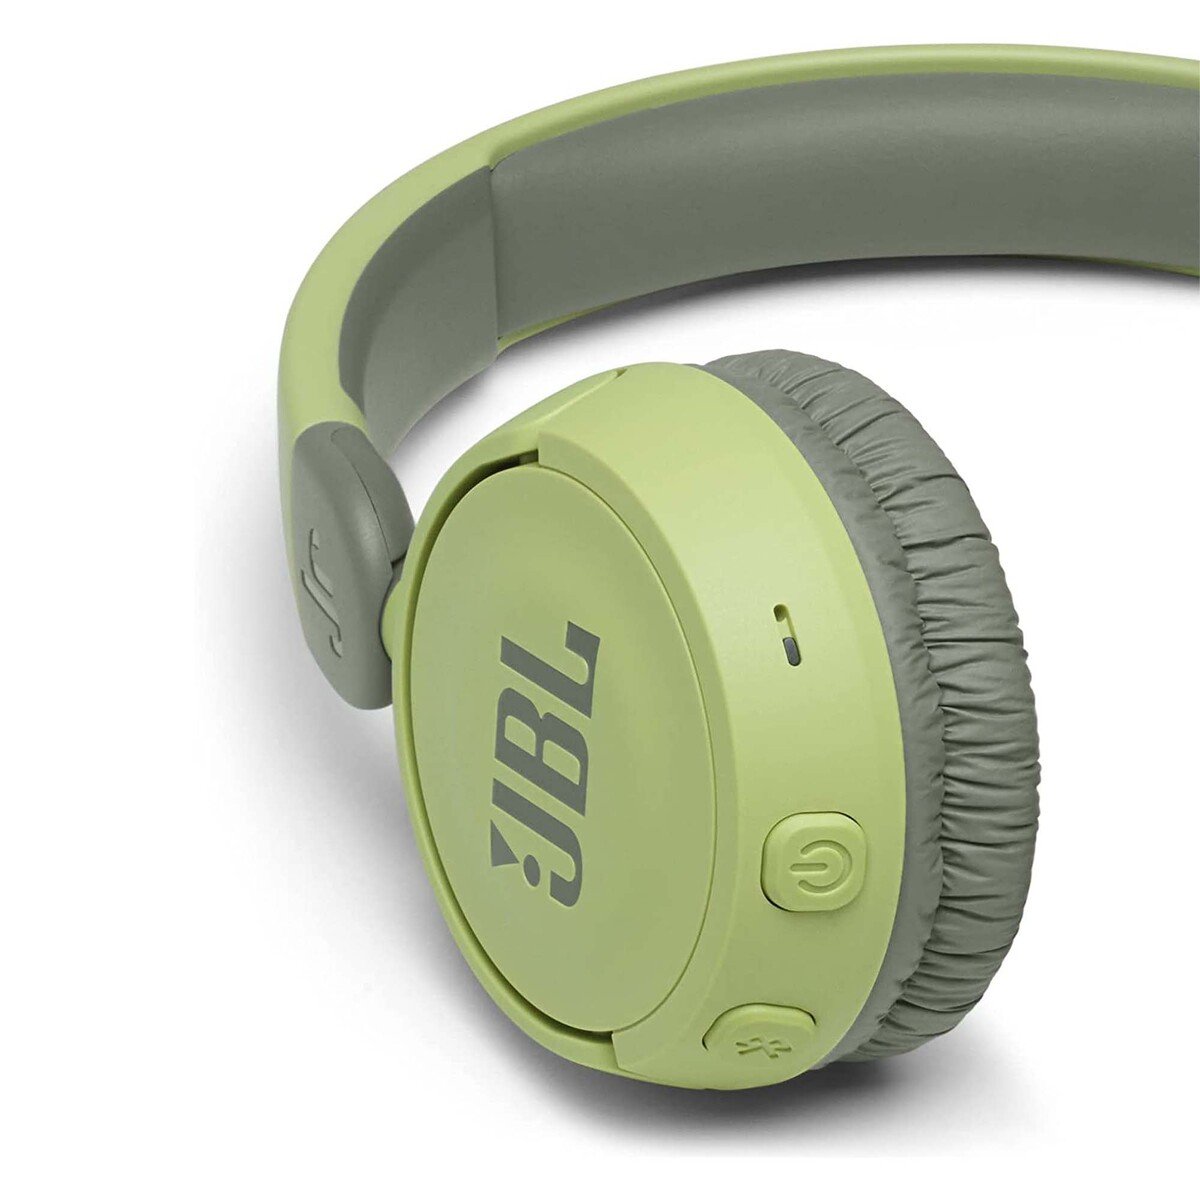 JBL Wireless Kids Headphone JR310BT Green